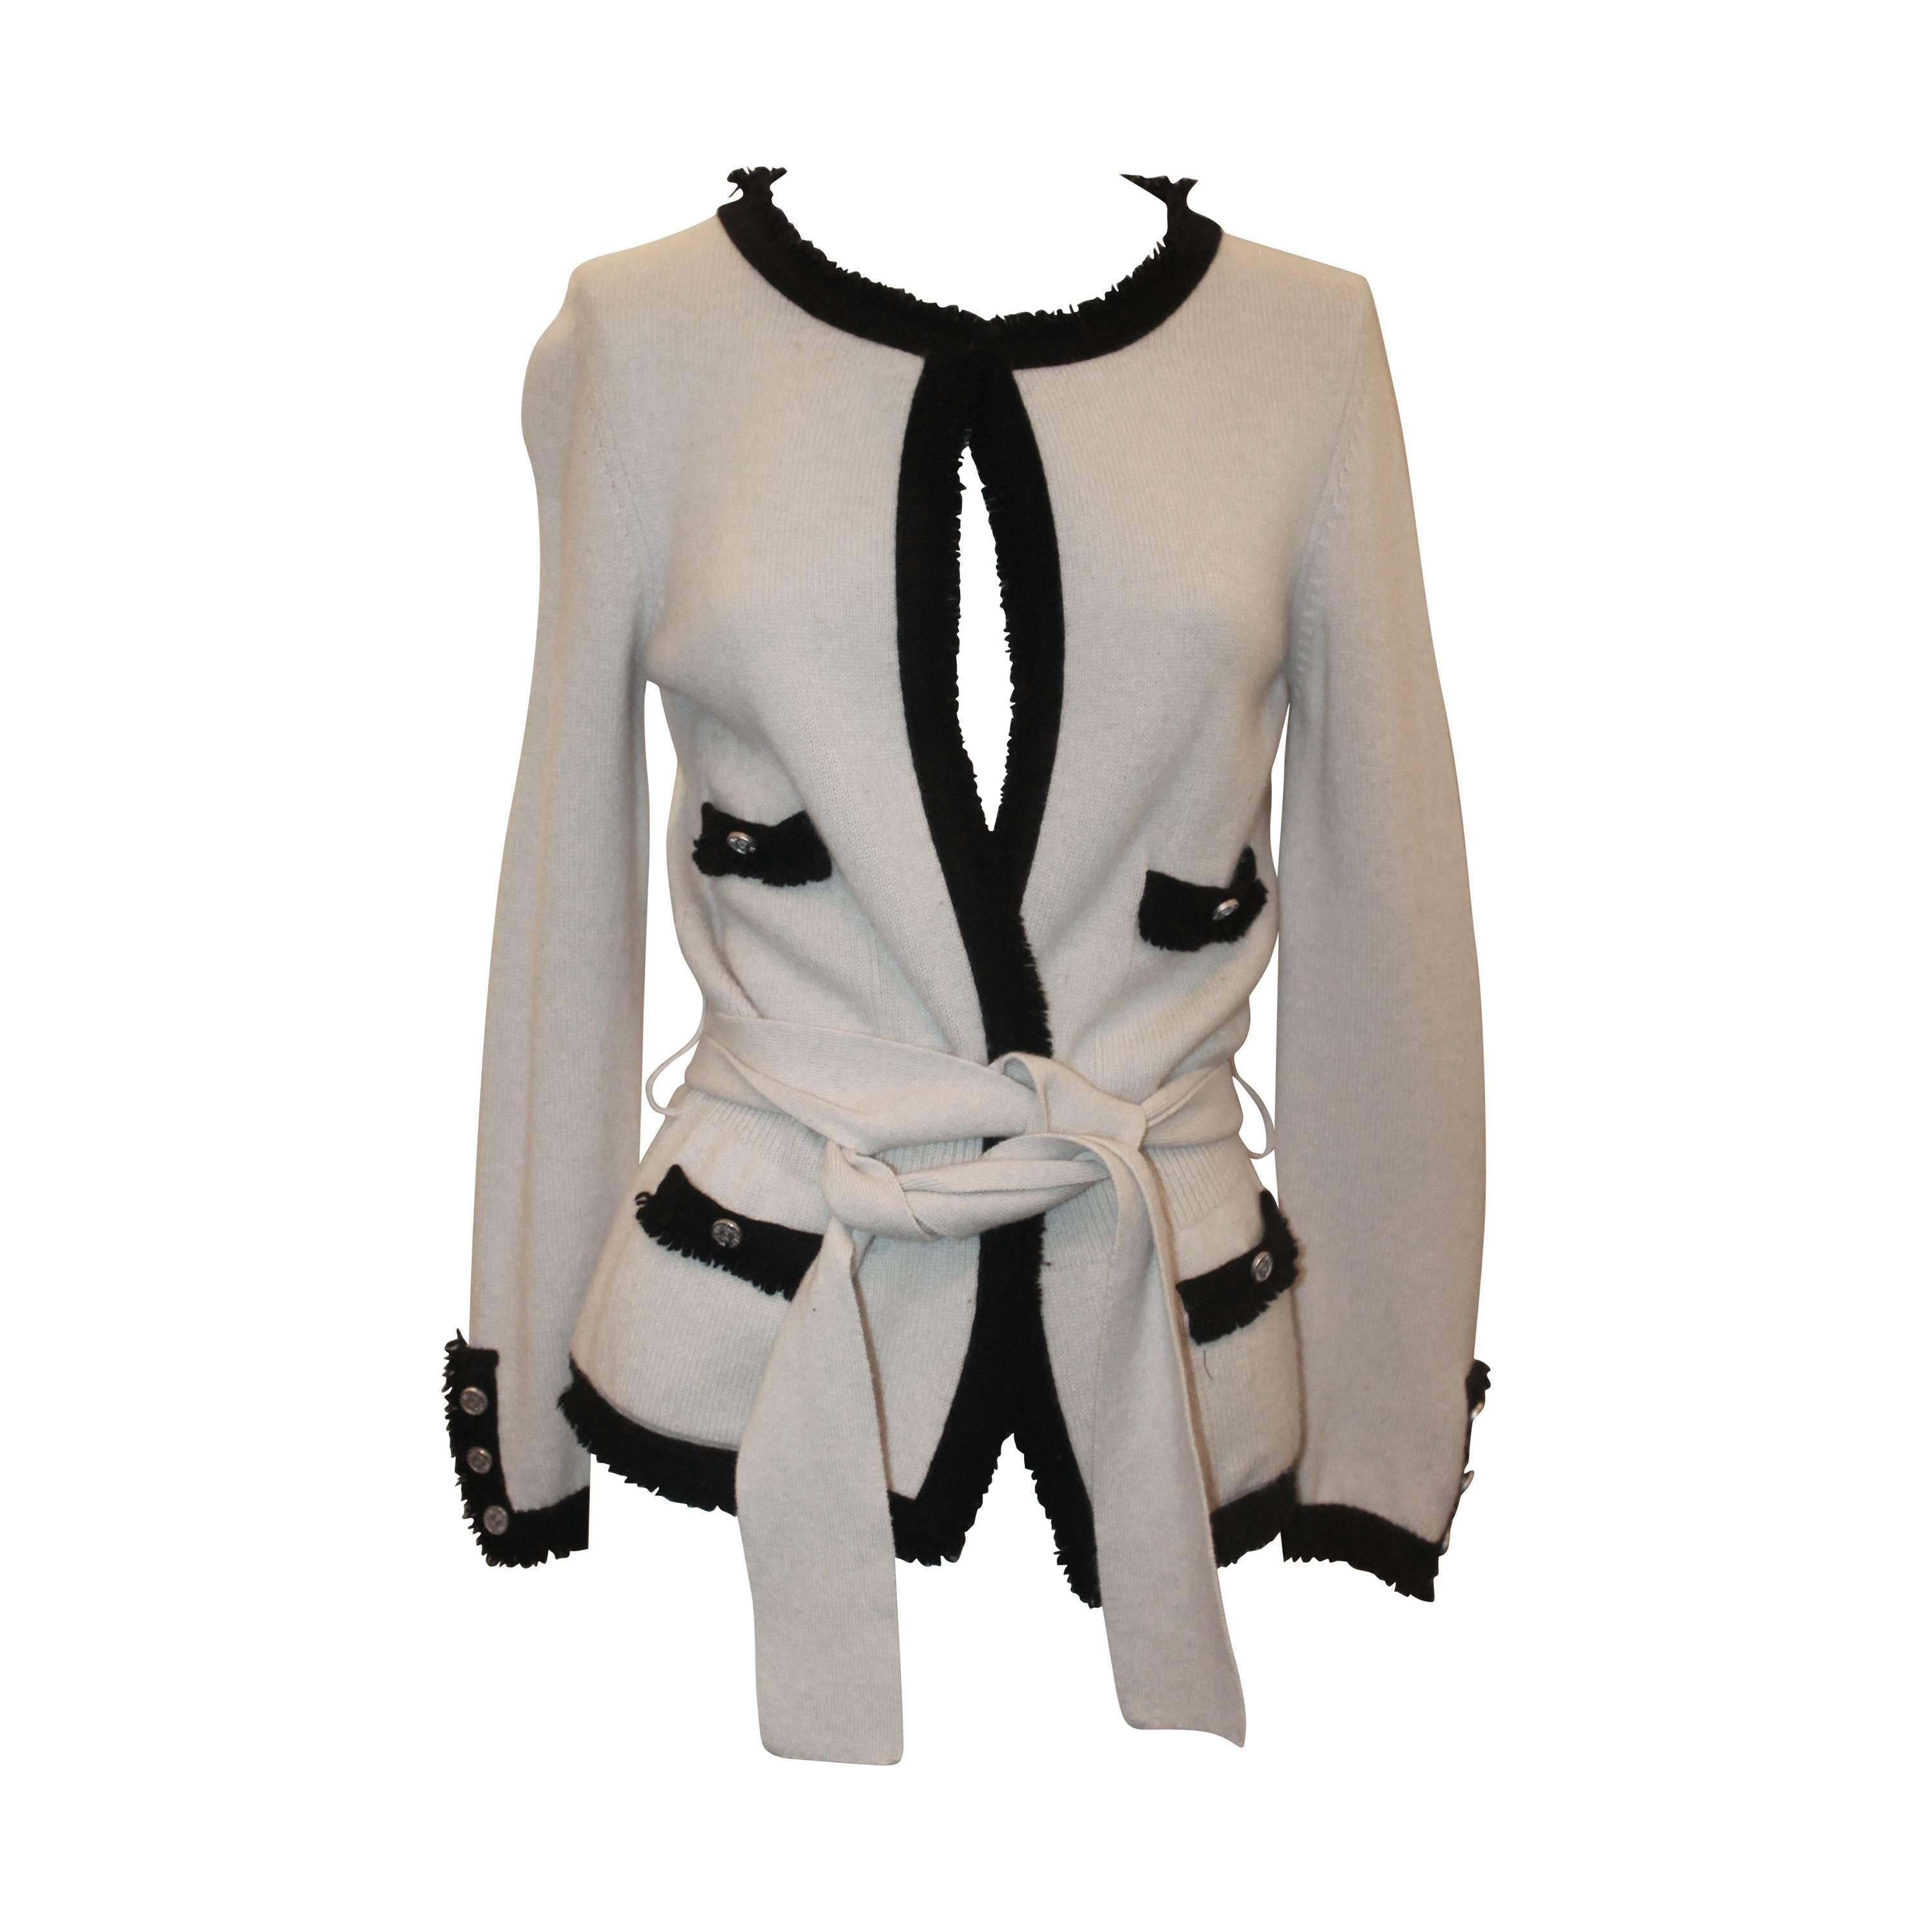 Chanel Cream Cashmere Sweater w/ Black Fringe Trim & Belt Sash - 38